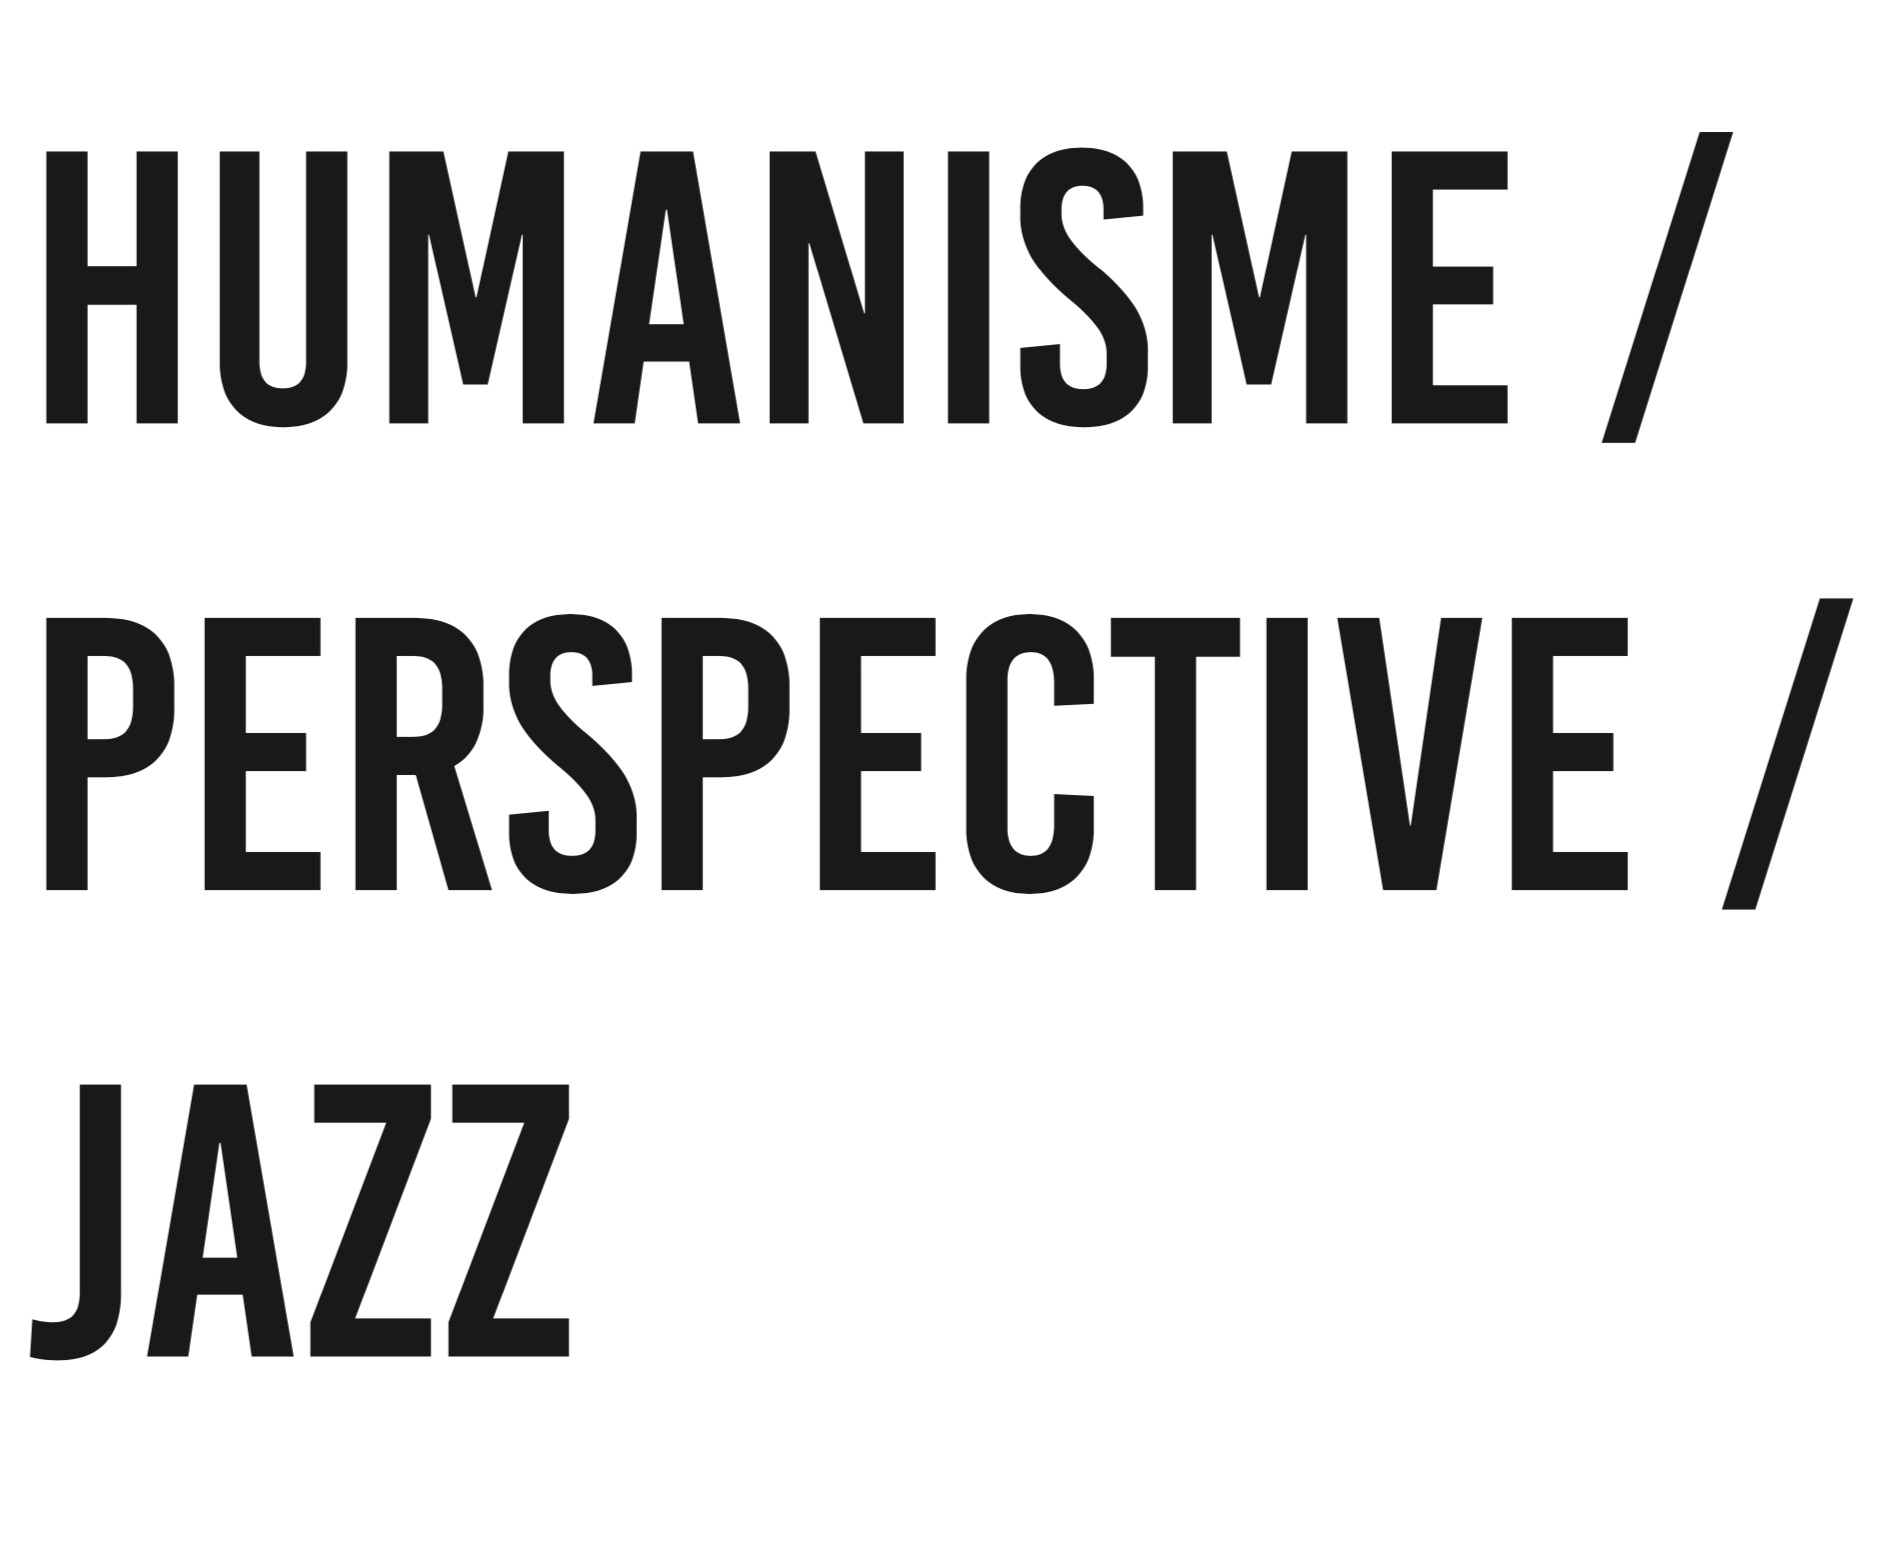  humanisme / perspective / jazz 